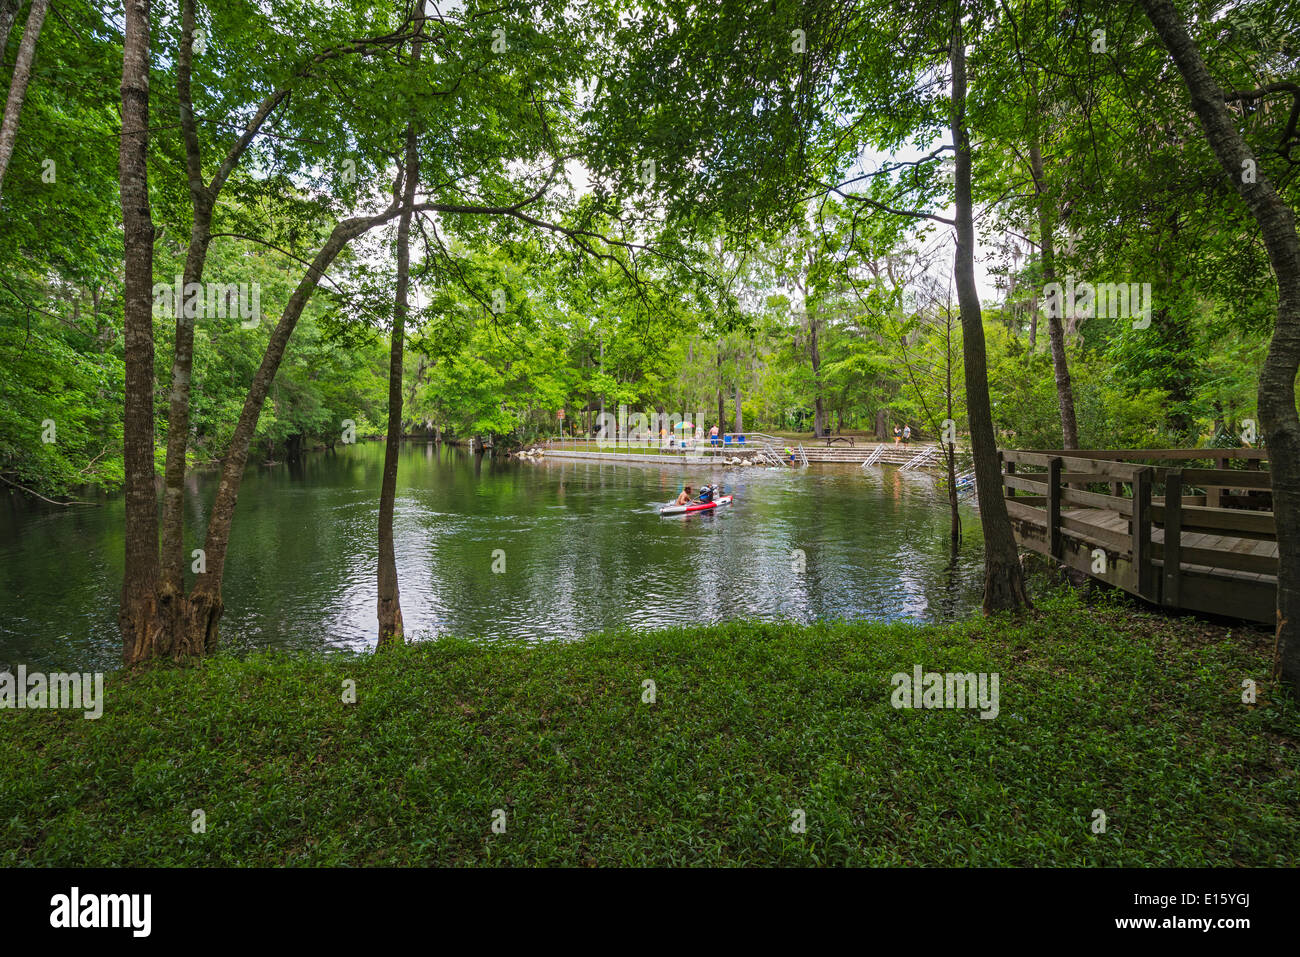 PoE Springs Park in der Nähe von High Springs Florida. Stockfoto